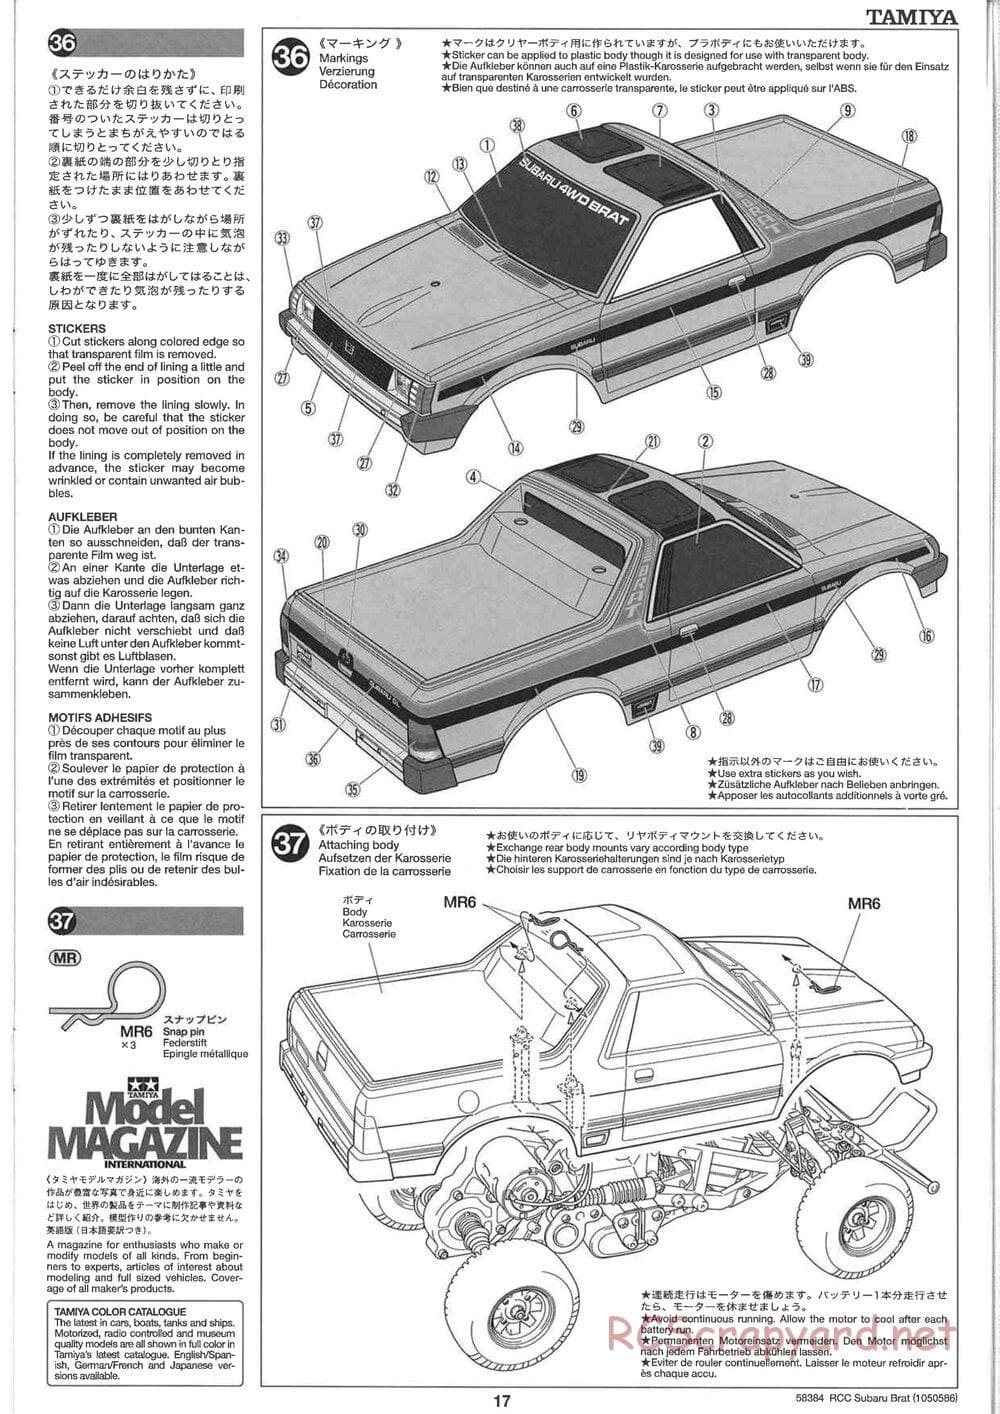 Tamiya - Subaru Brat 2007 - ORV Chassis - Manual - Page 17